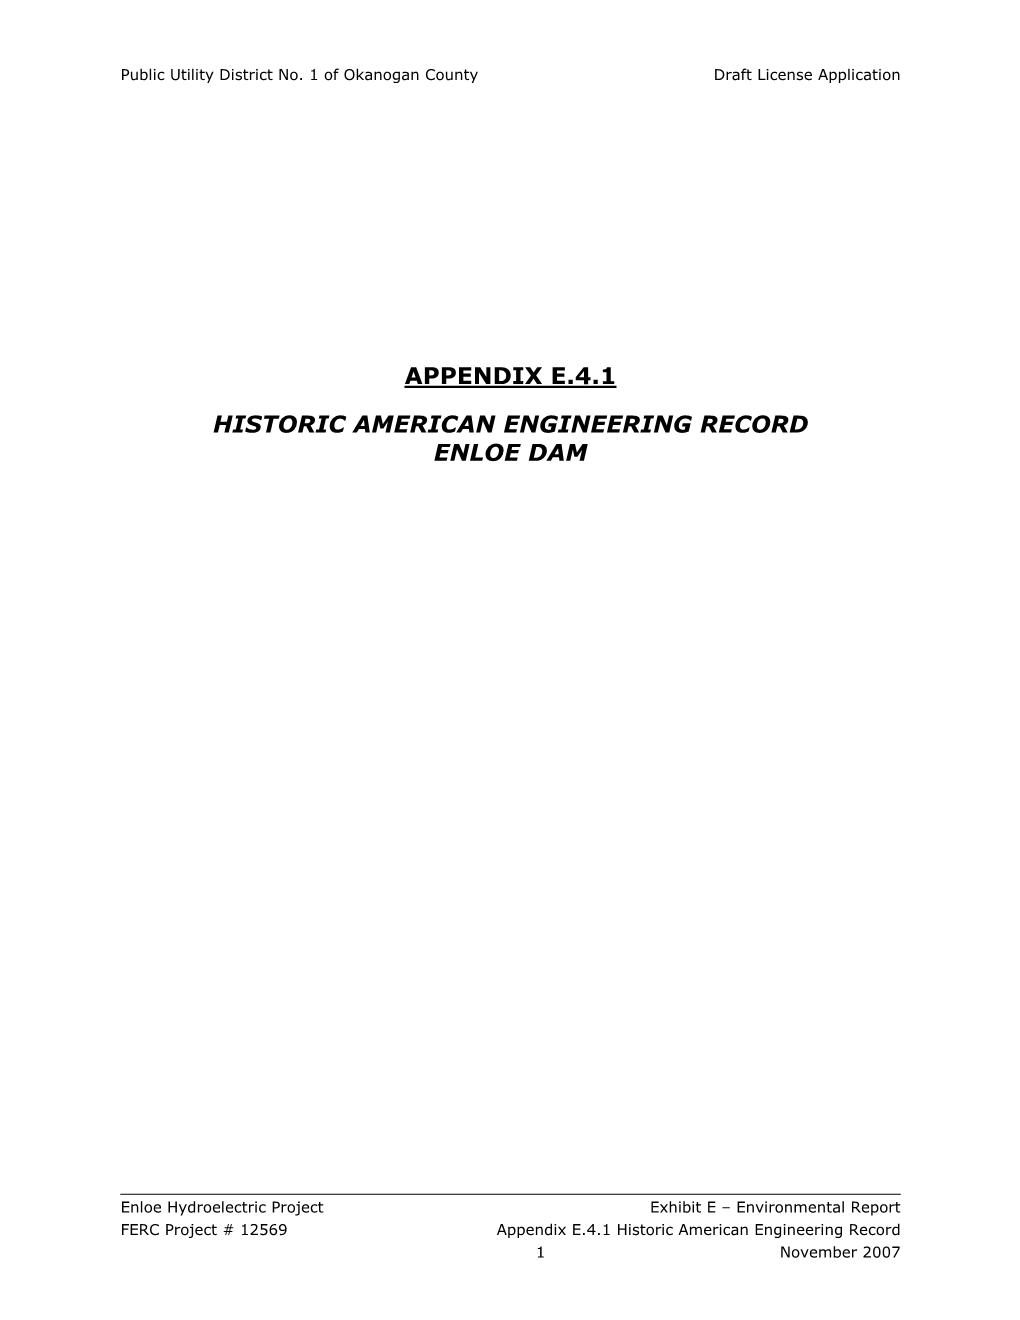 Appendix E.4.1 Historic American Engineering Record Enloe